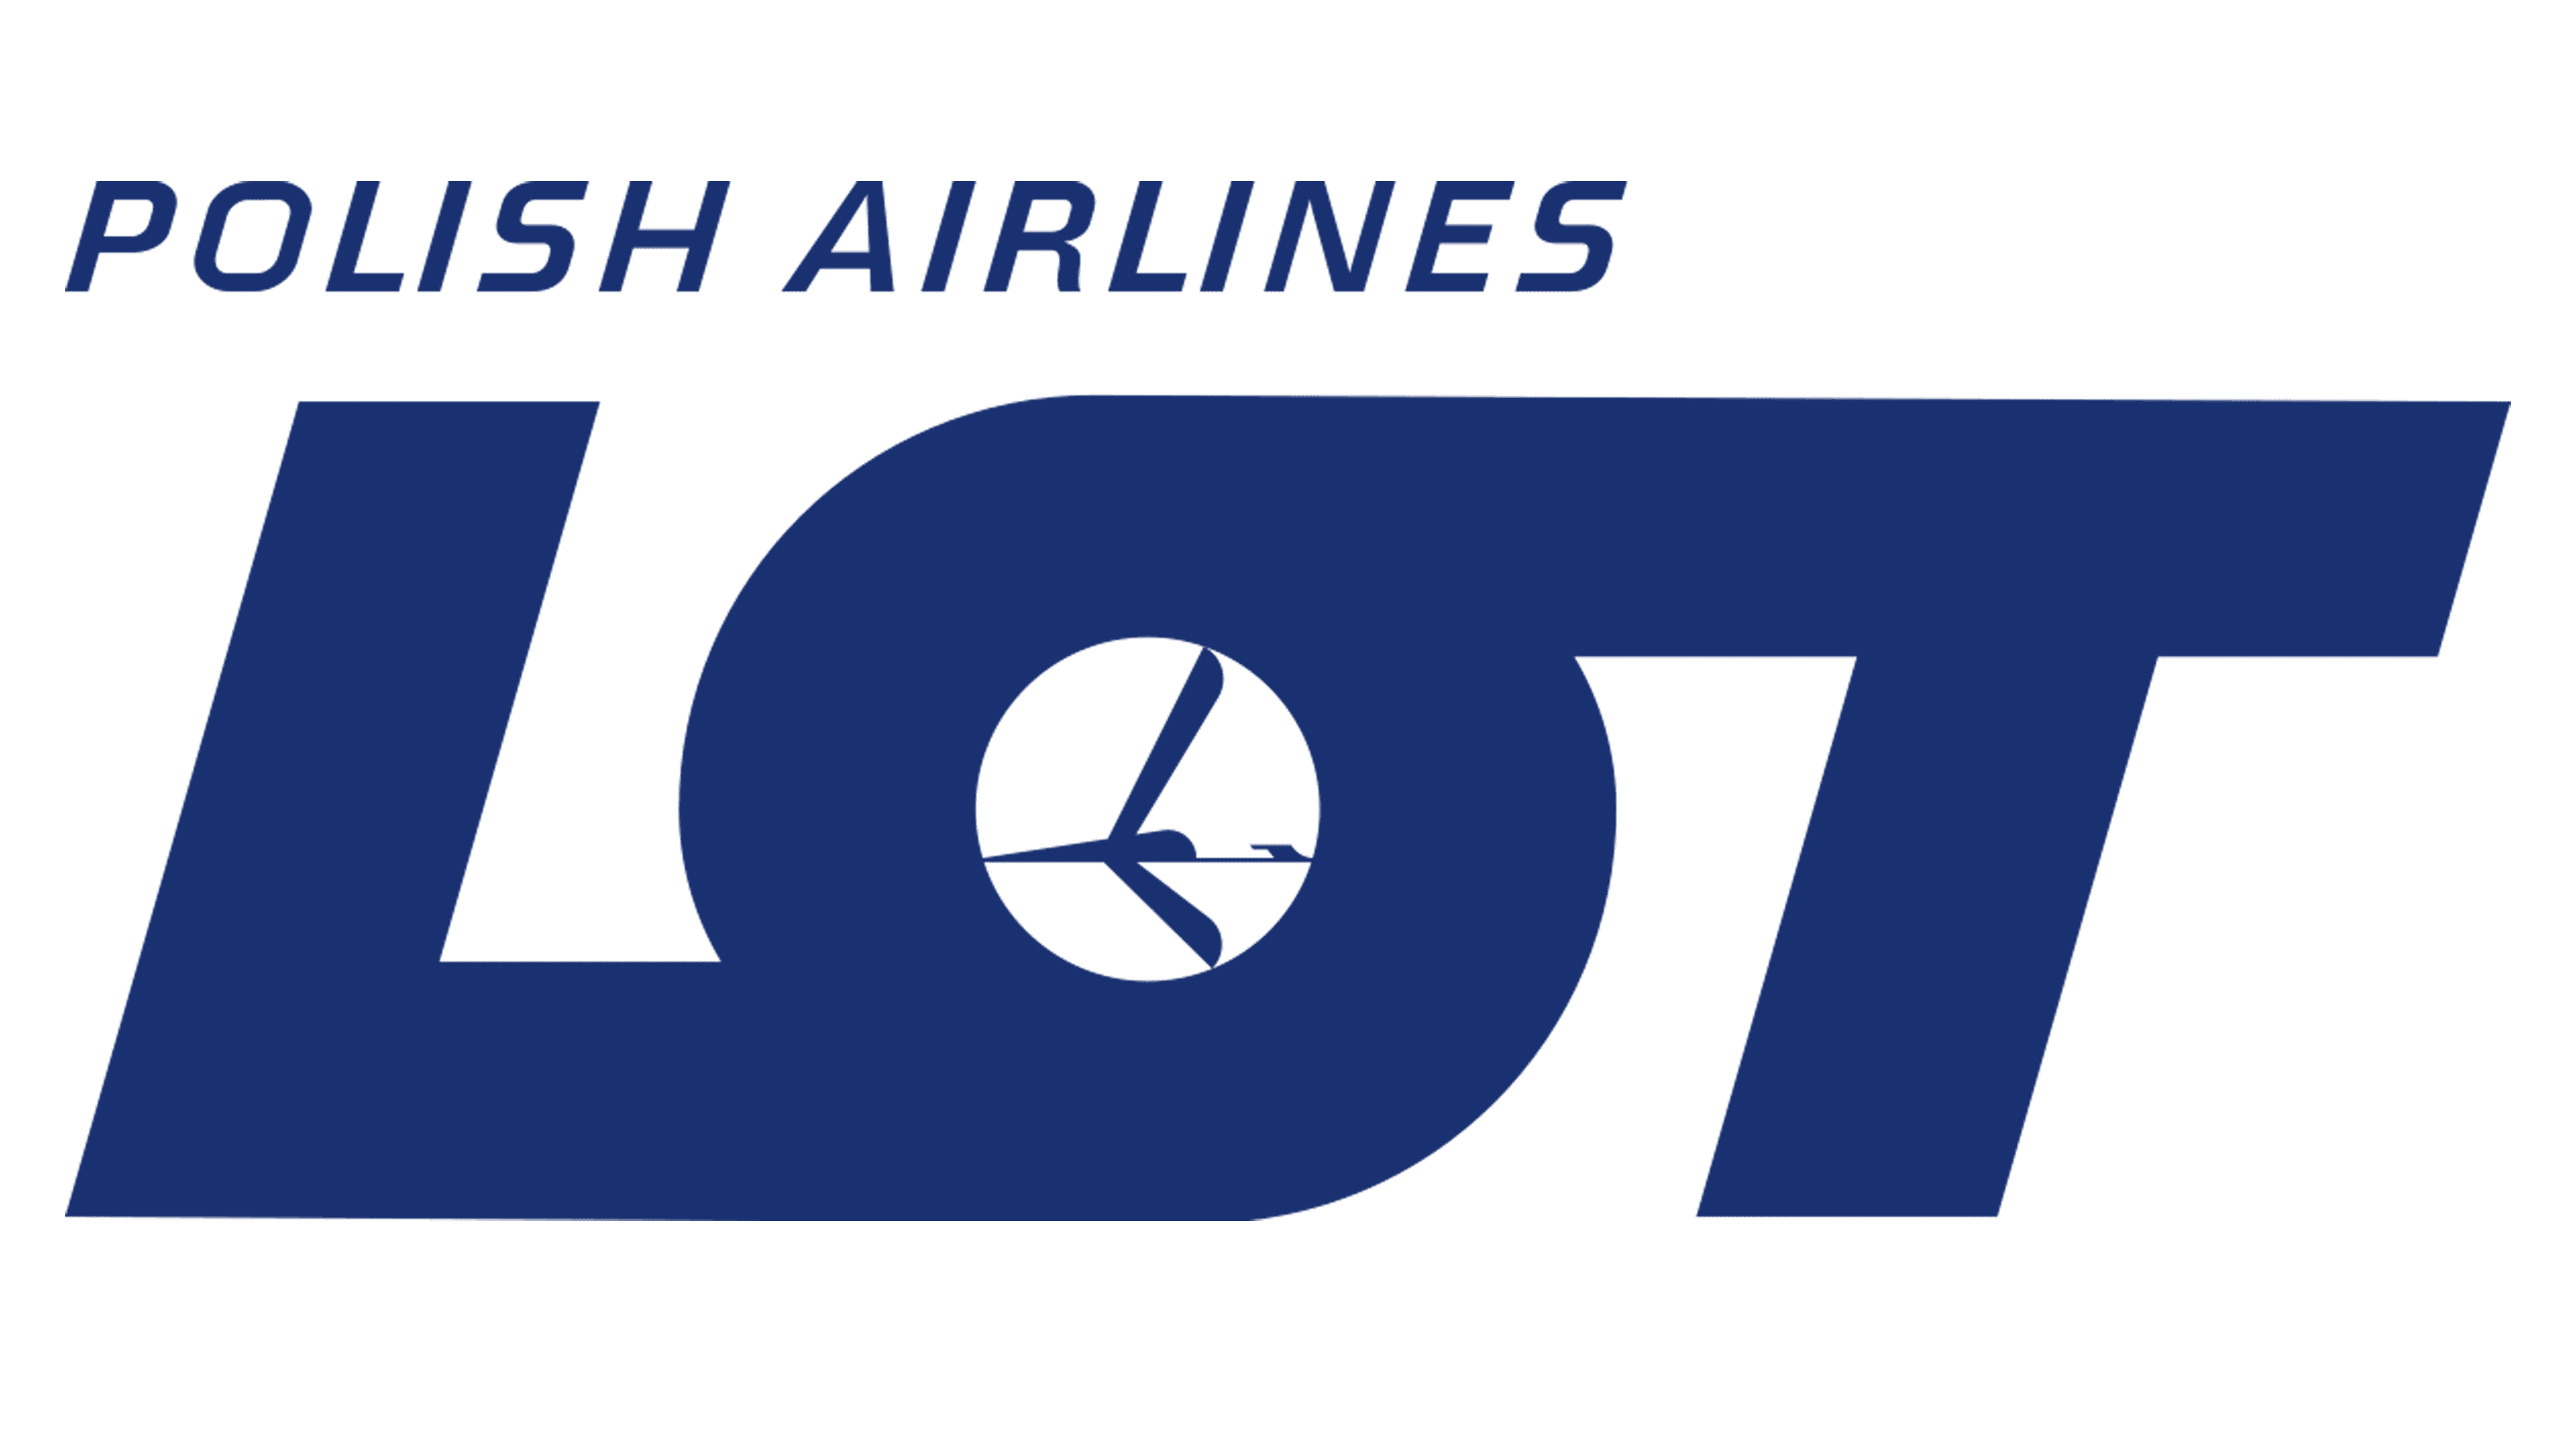 Polish Airlines. Логотипы авиакомпаний. Lot (авиакомпания). Airline логотип. Lot polish airlines